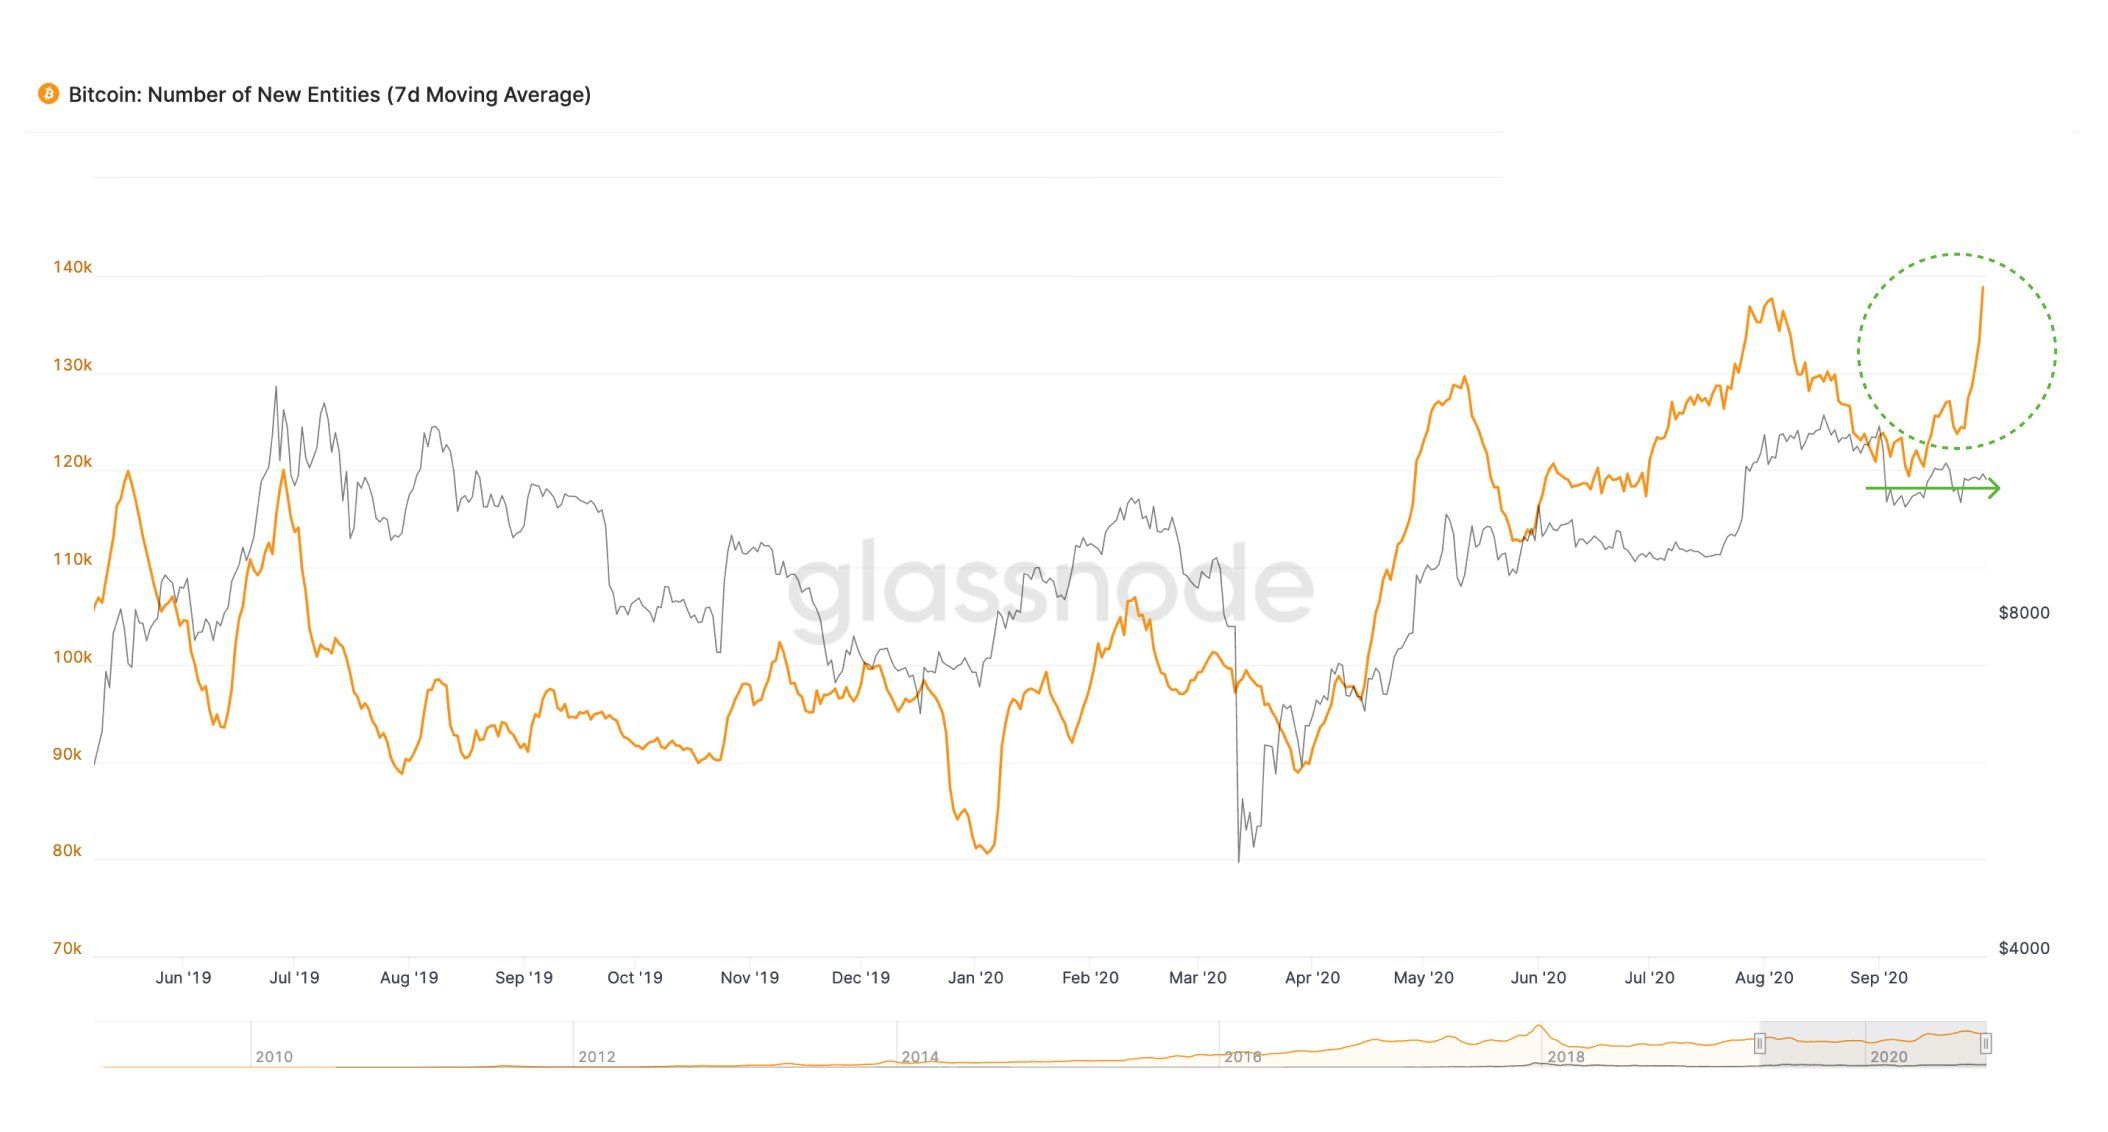  bitcoin btc 2020 bullish drawdowns below price 